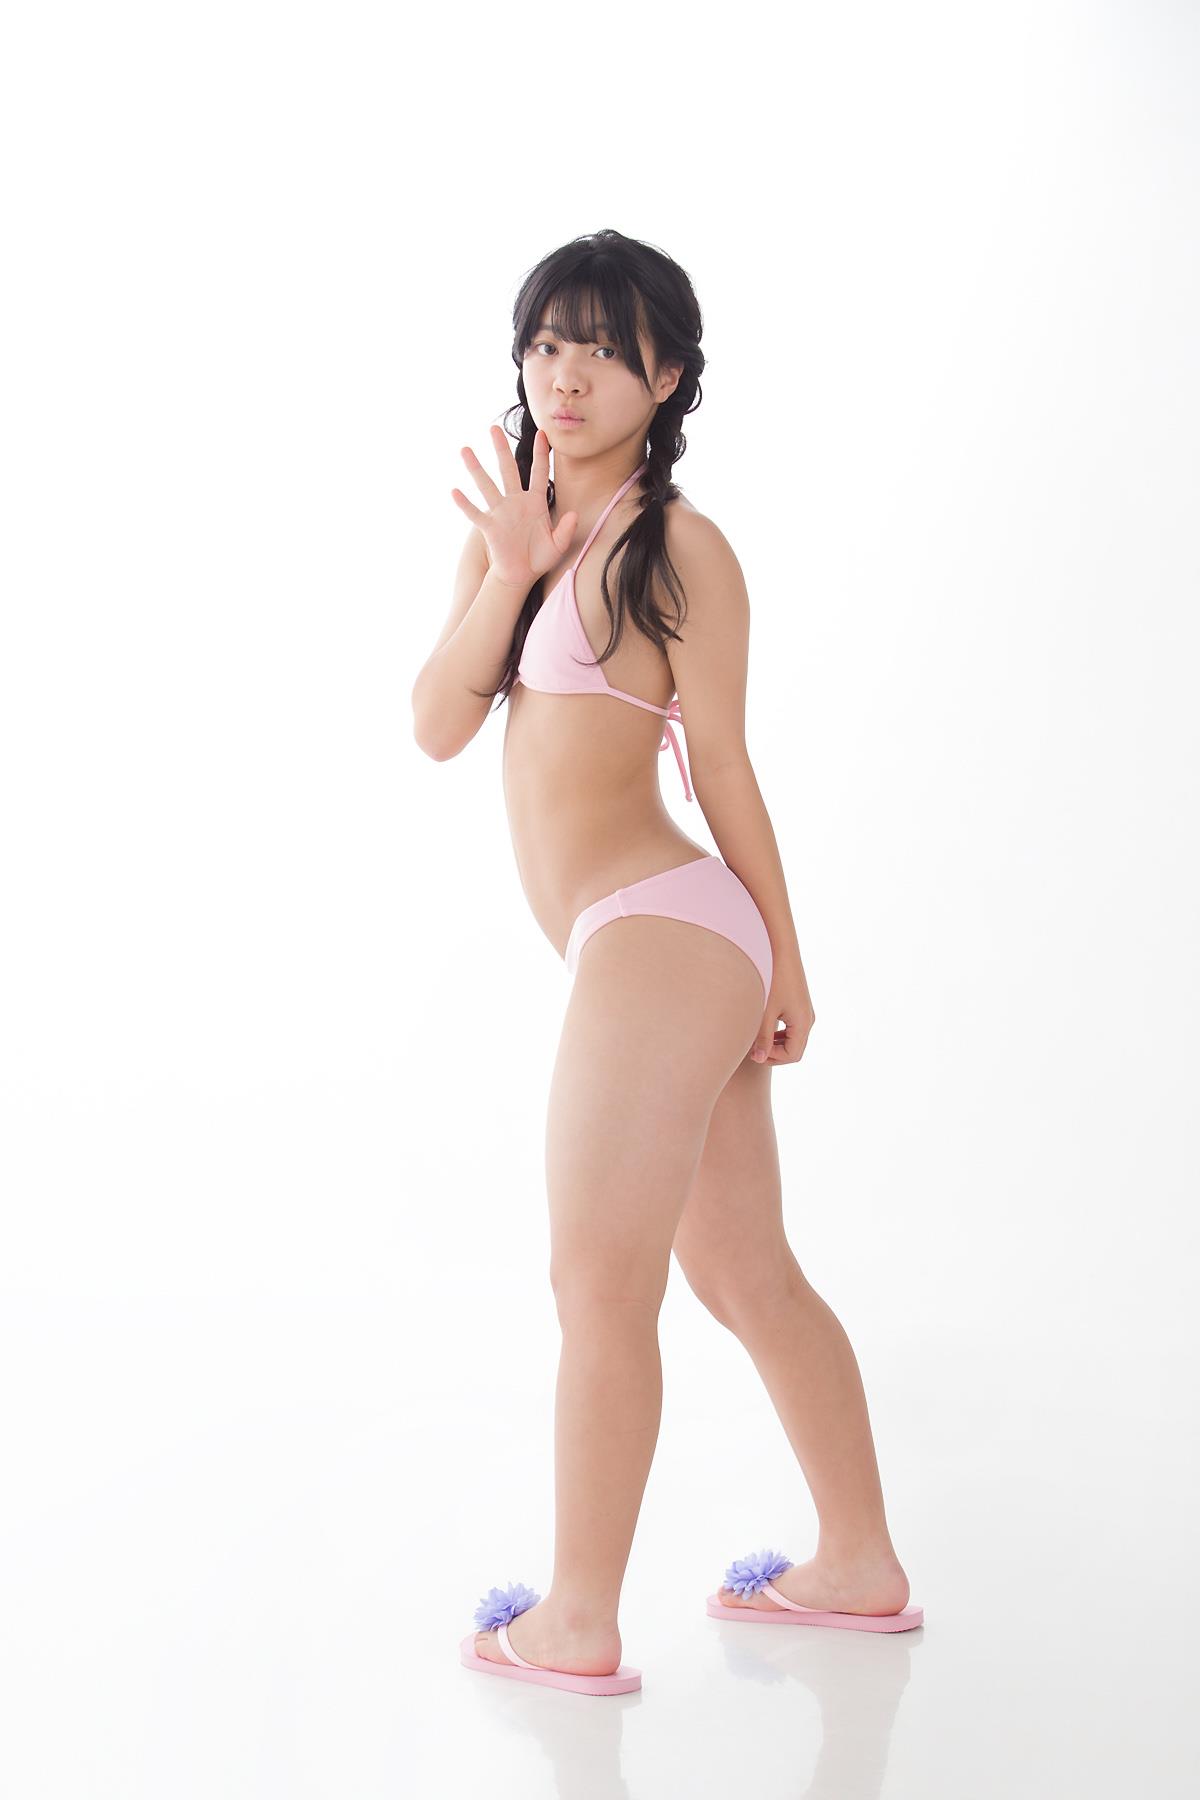 Minisuka.tv Saria Natsume 夏目咲莉愛 - Premium Gallery 2.4 - 15.jpg